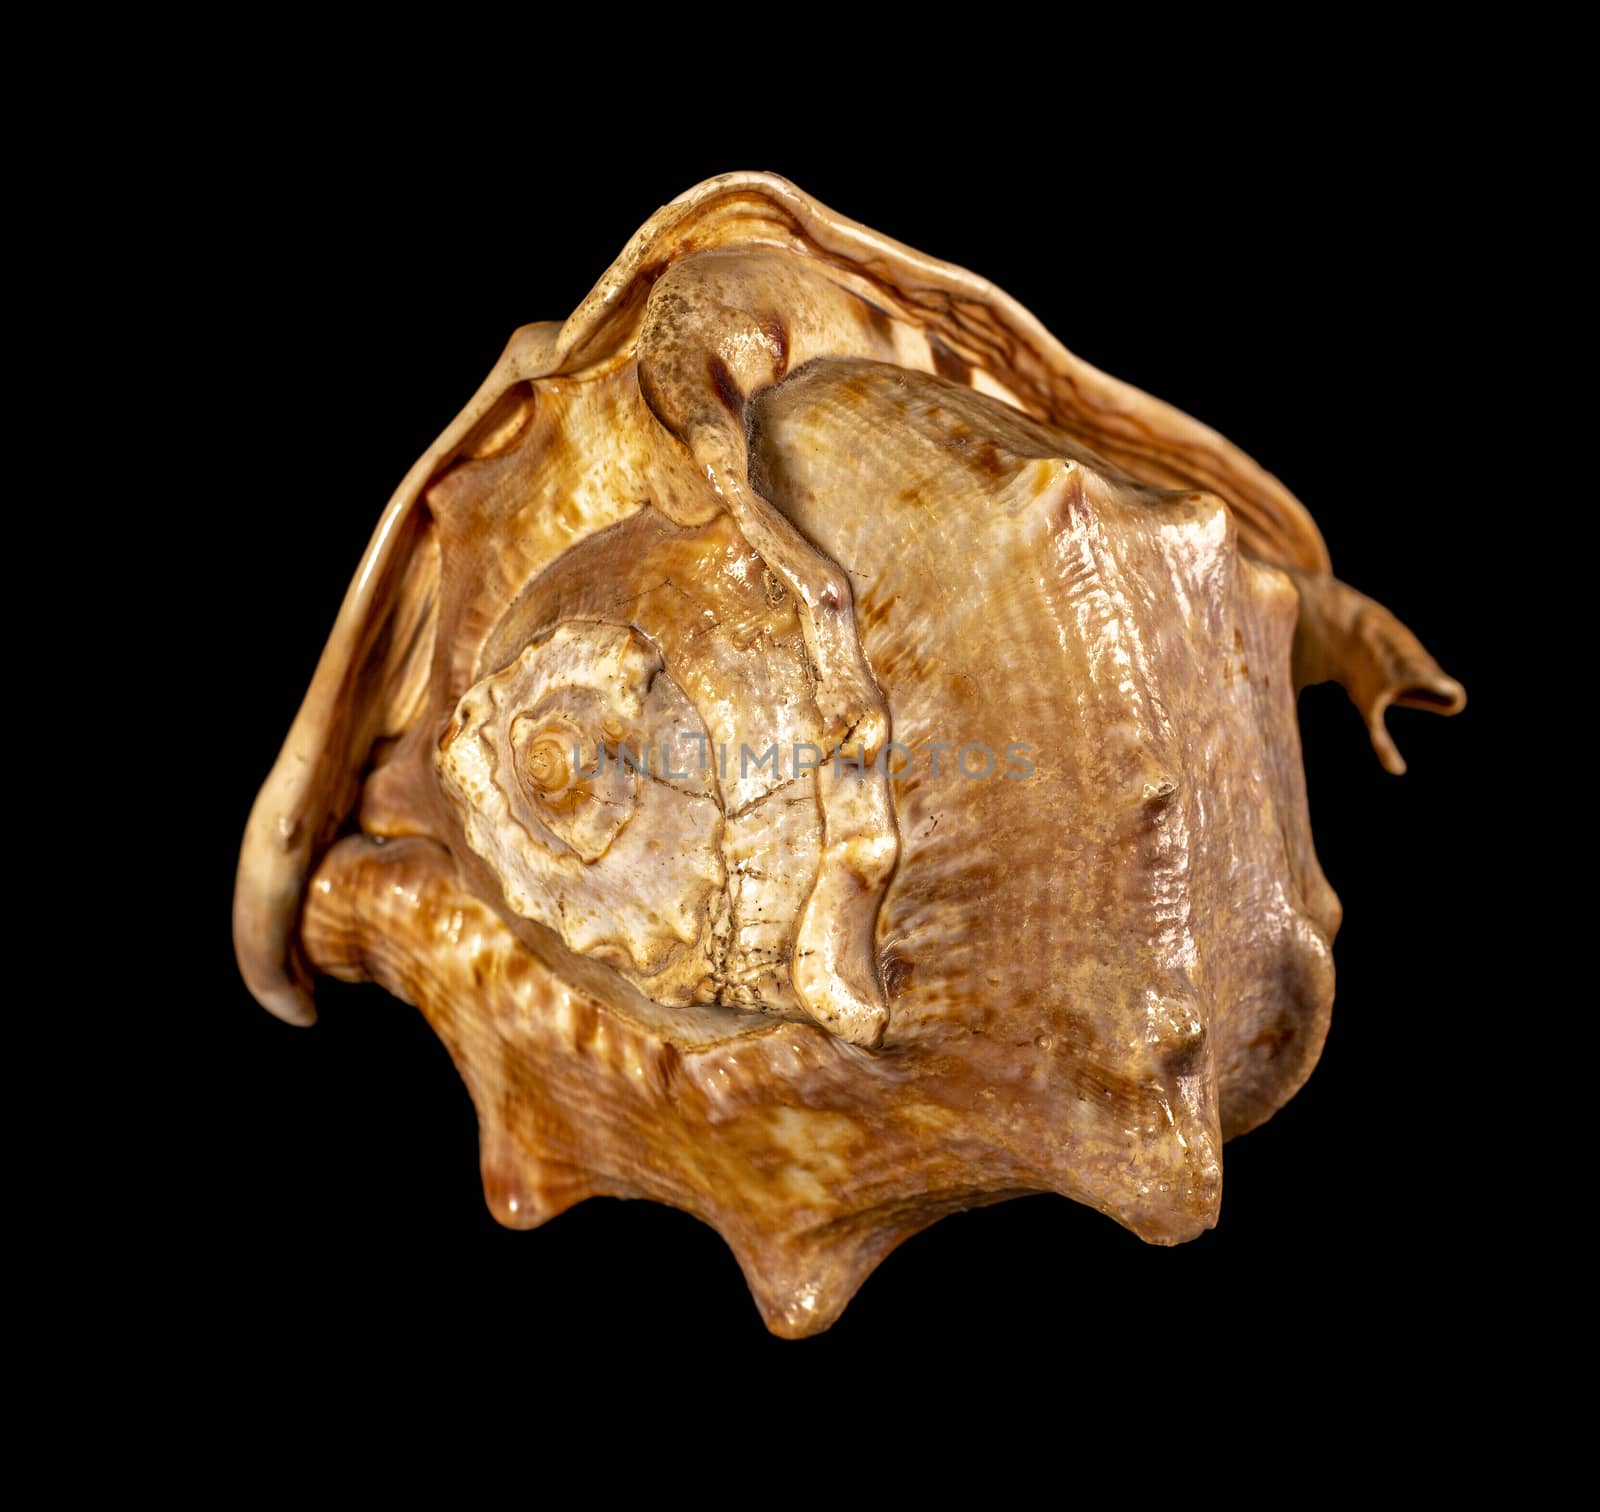 Sea shell isolated on a black background. Beautiful seashell close-up. Cassis cornuta, horned helmet